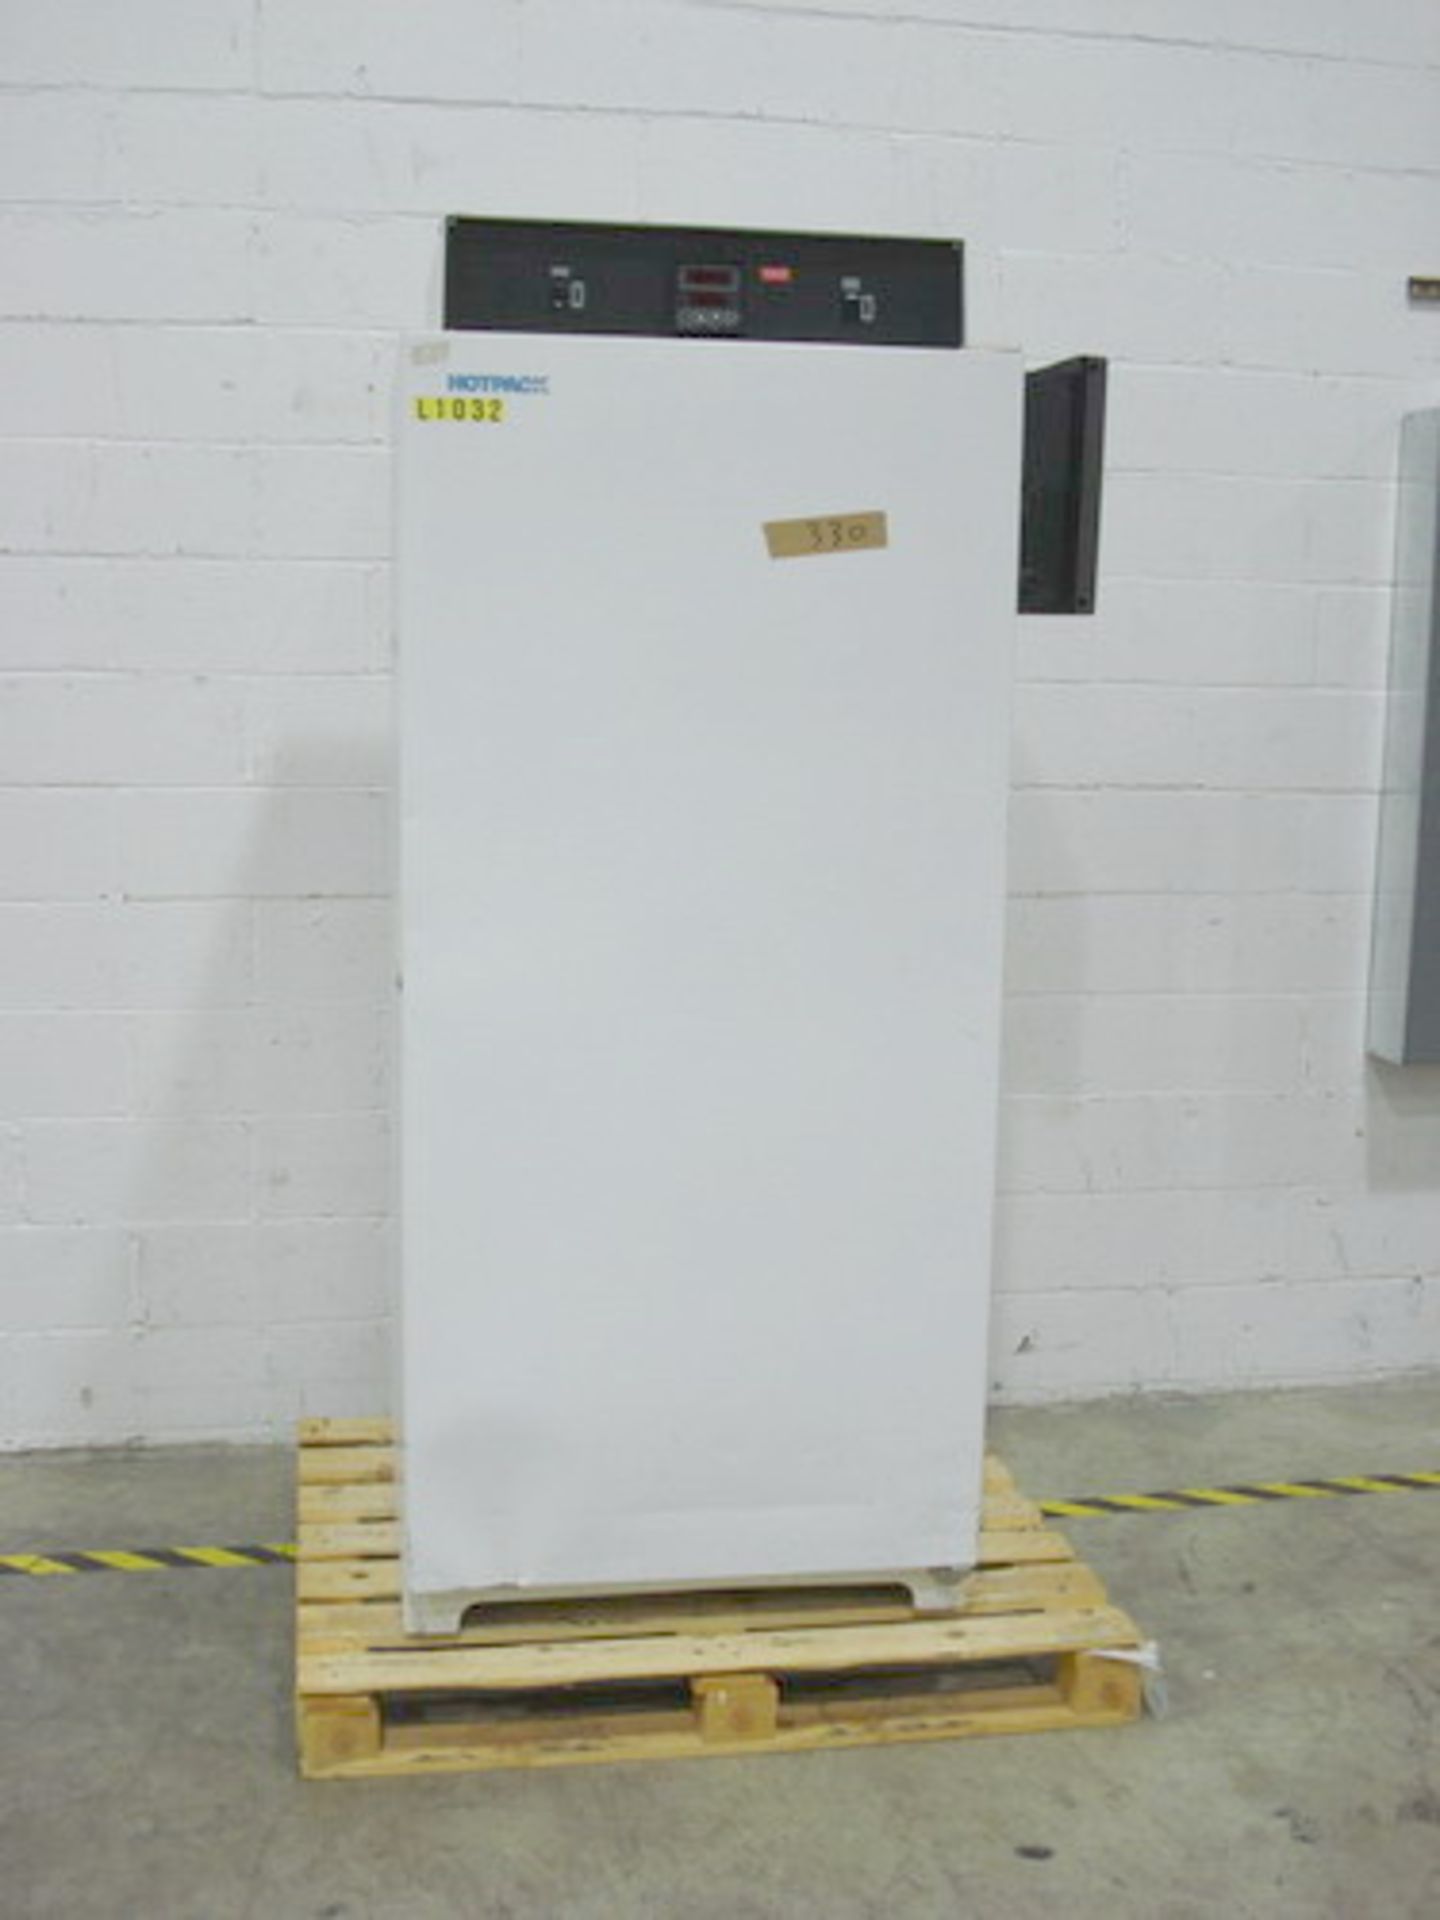 Hotpack Single Door Refrigerator with chart recorder.